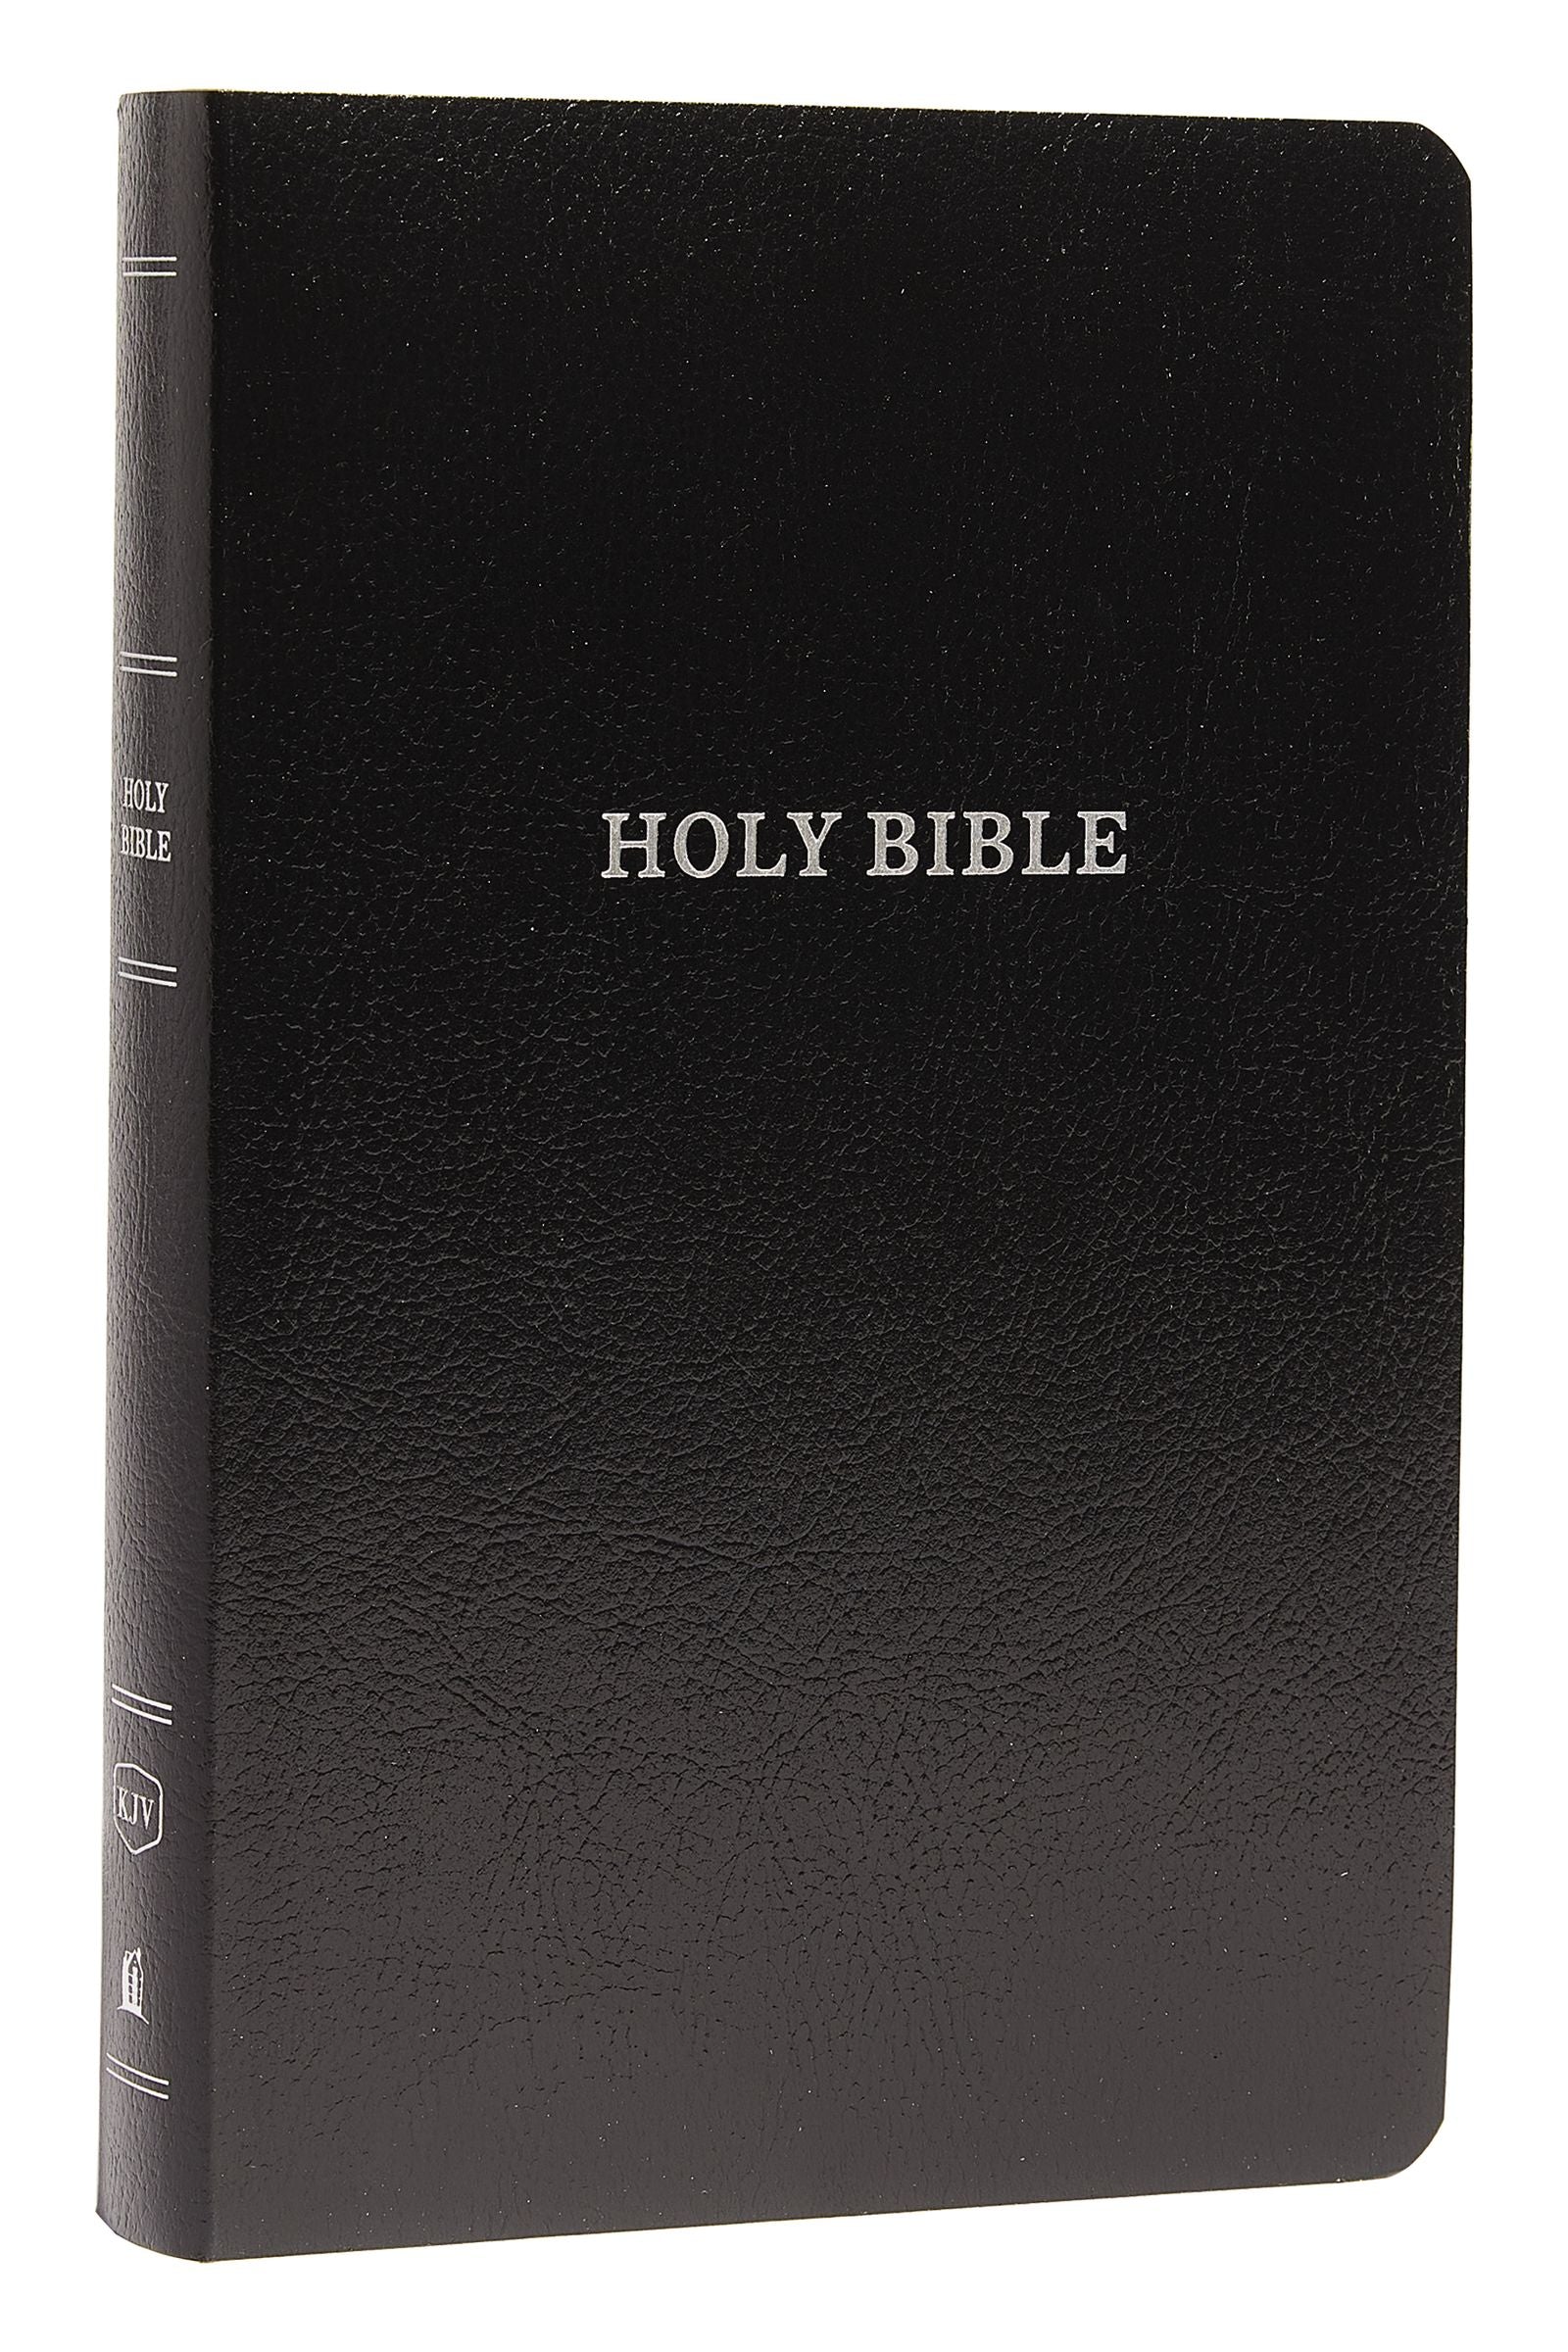 KJV, Gift and Award Bible, Leather-Look, Black, Red Letter, Comfort Print